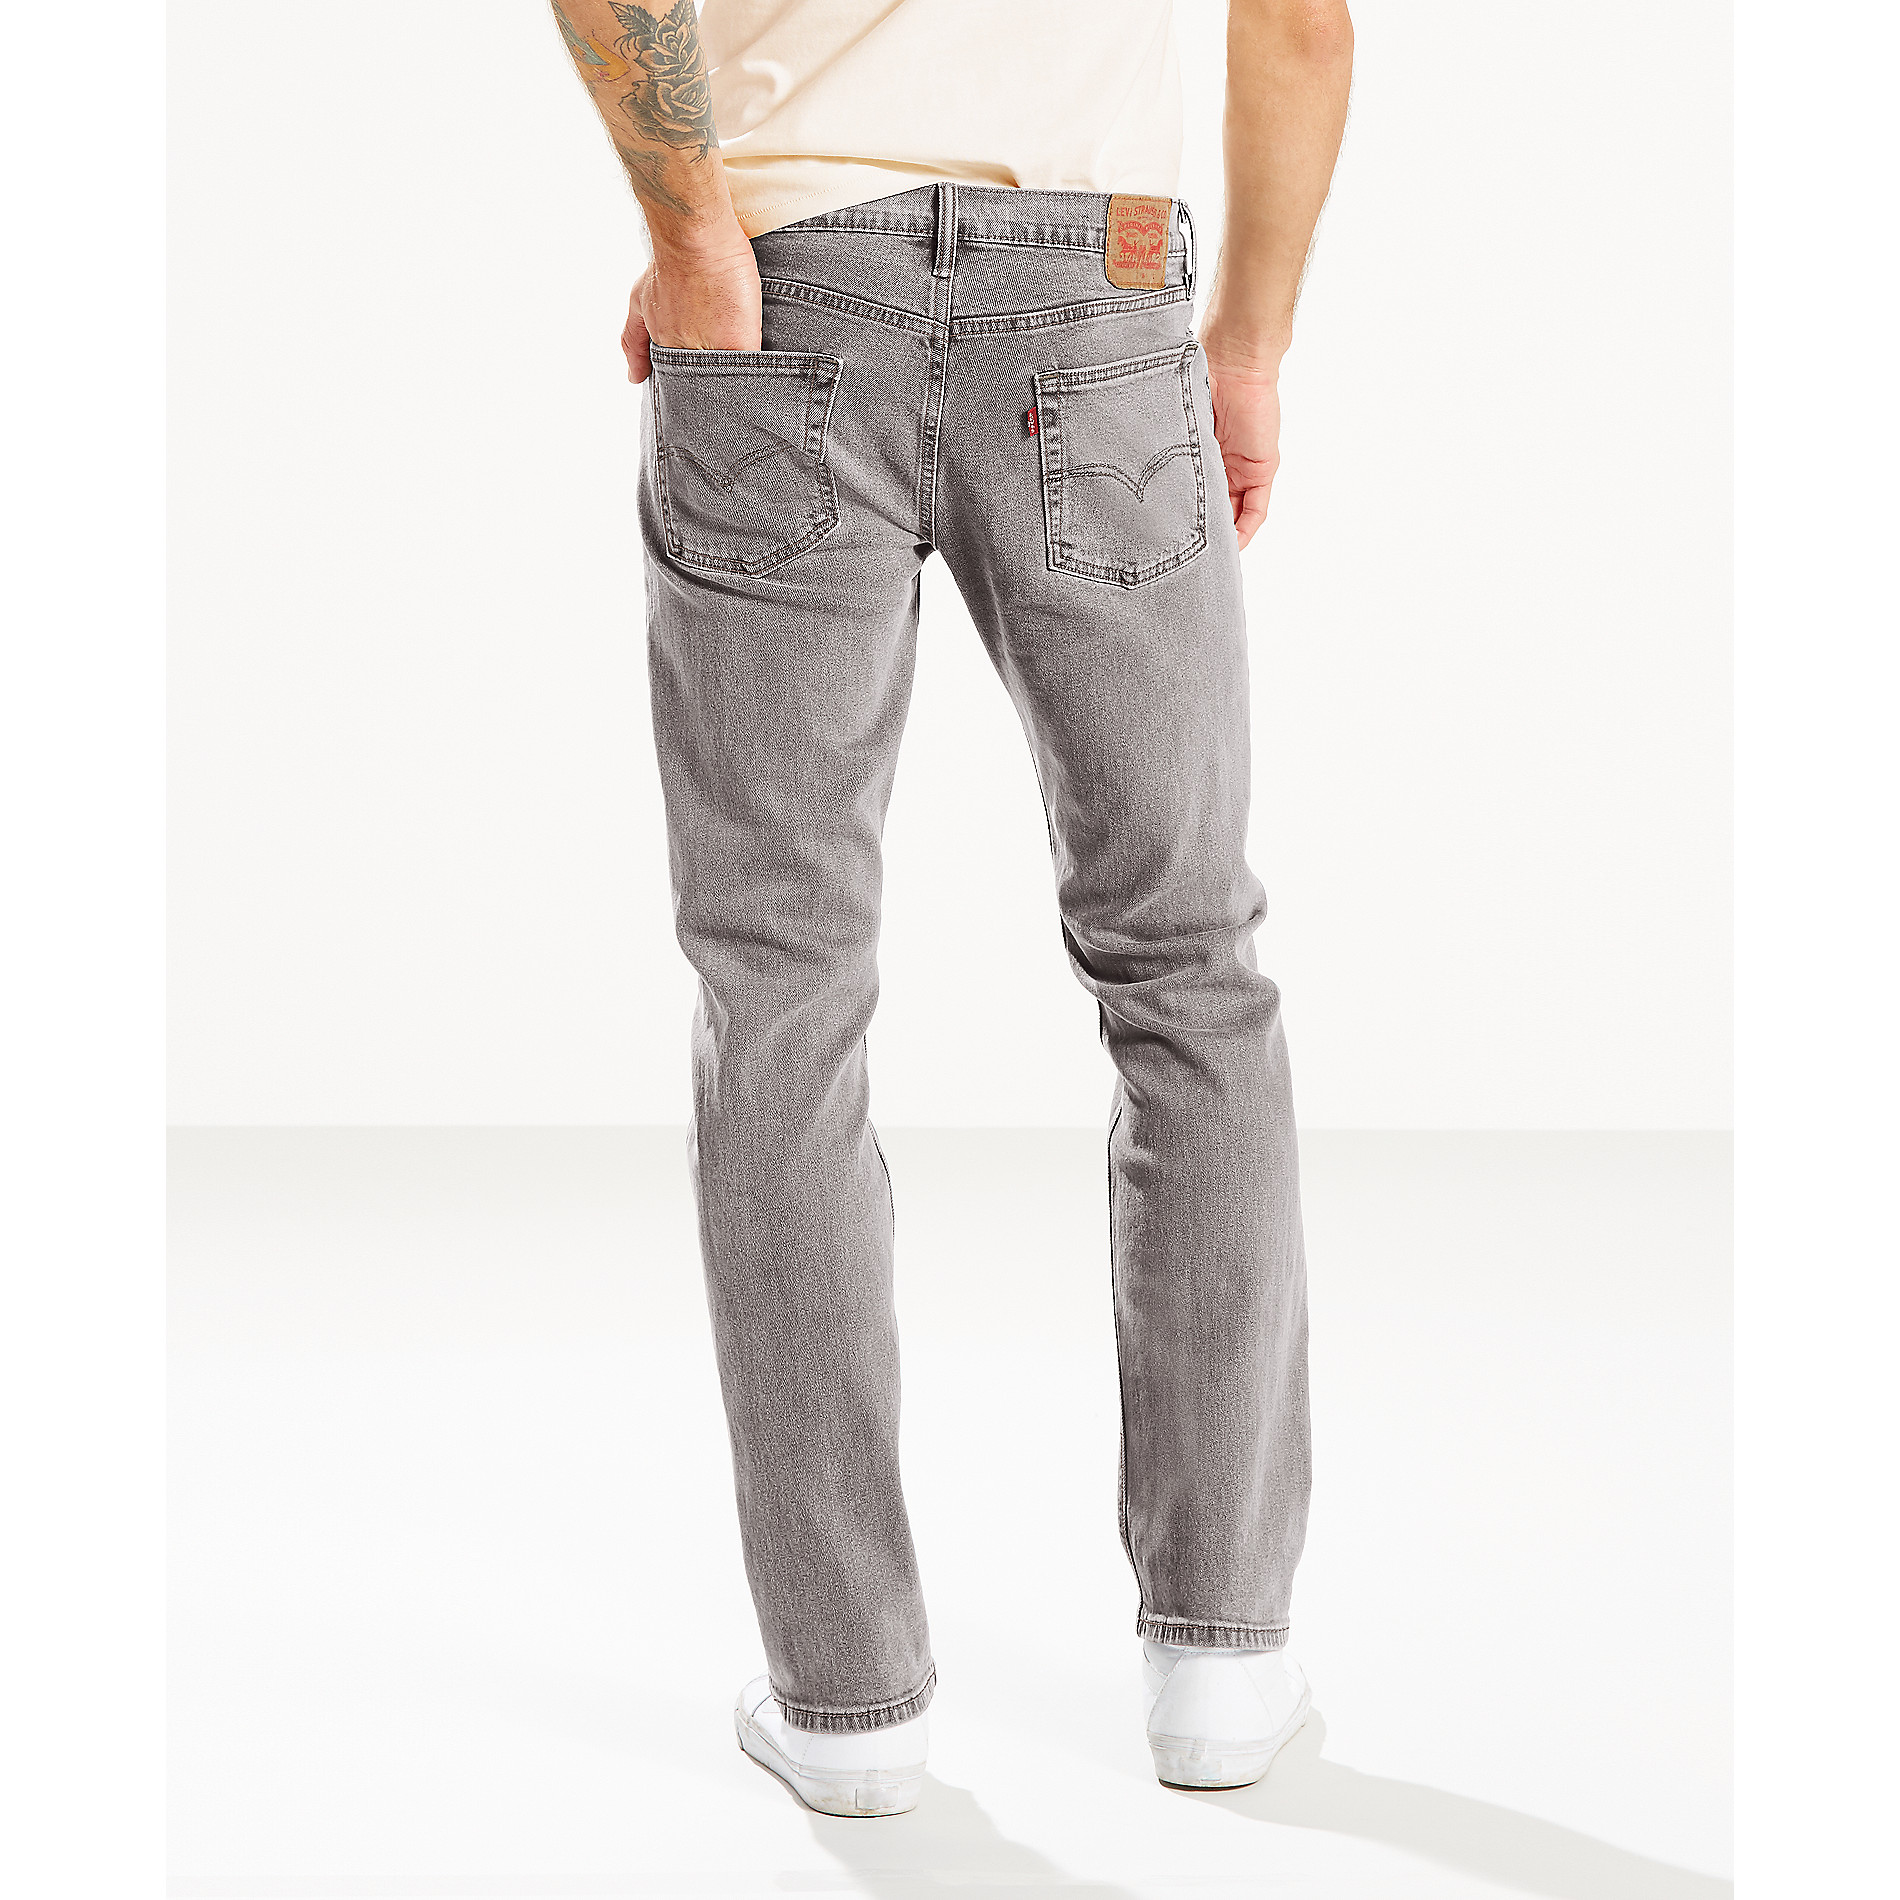 Levi's Men's 513 Slim Straight Jeans